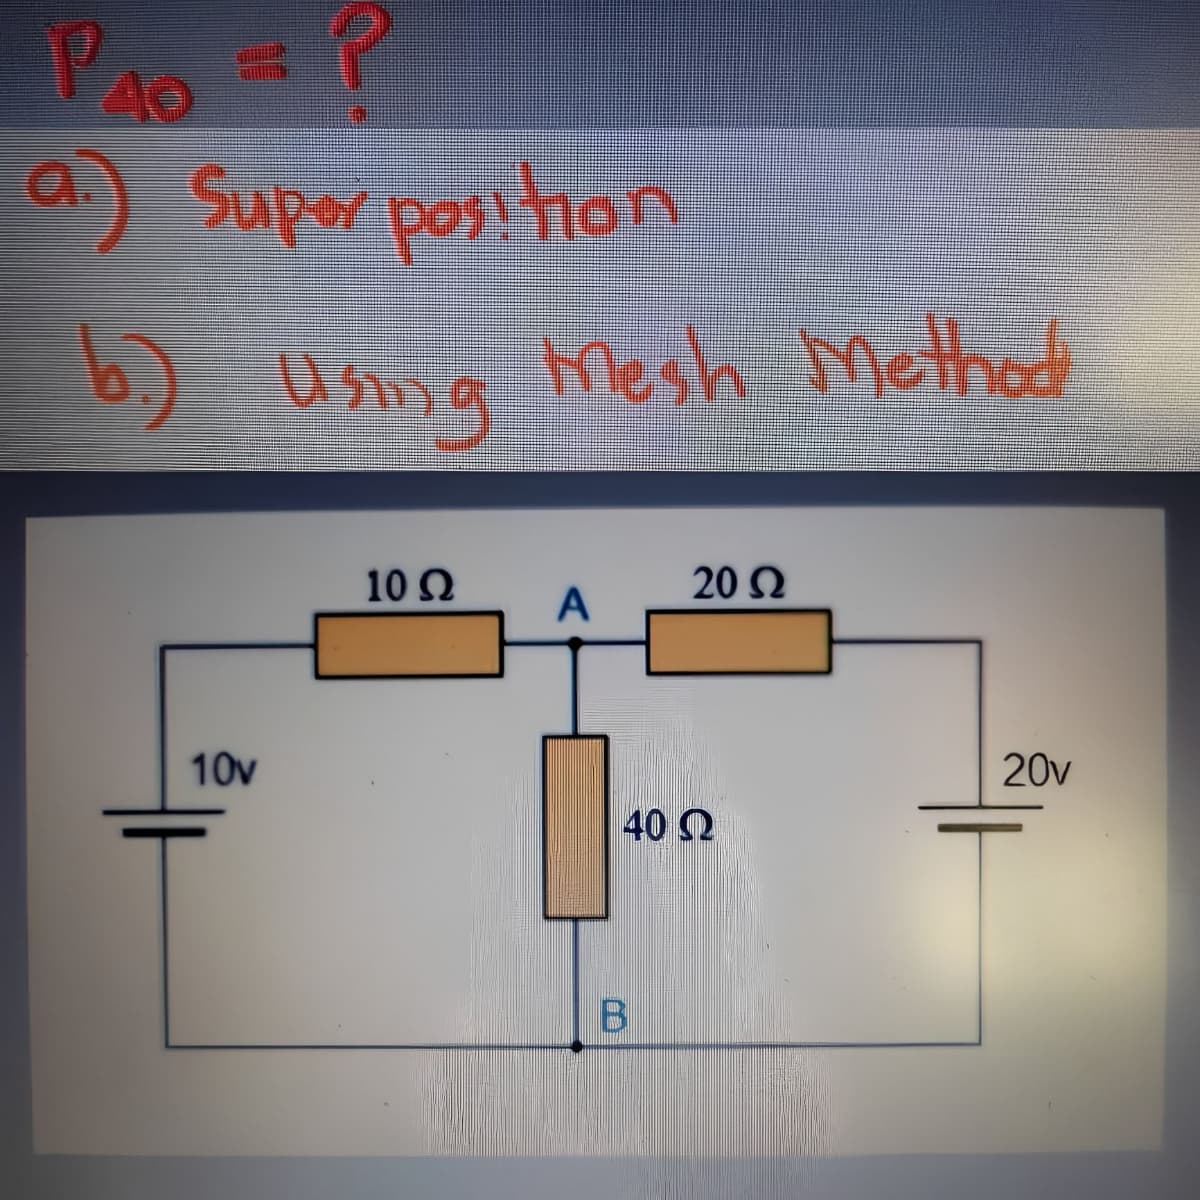 P P
40
a.) Super position
b.) Using Mesh Method
10v
10 Q2
A
40 Ω
20 Ω
20v